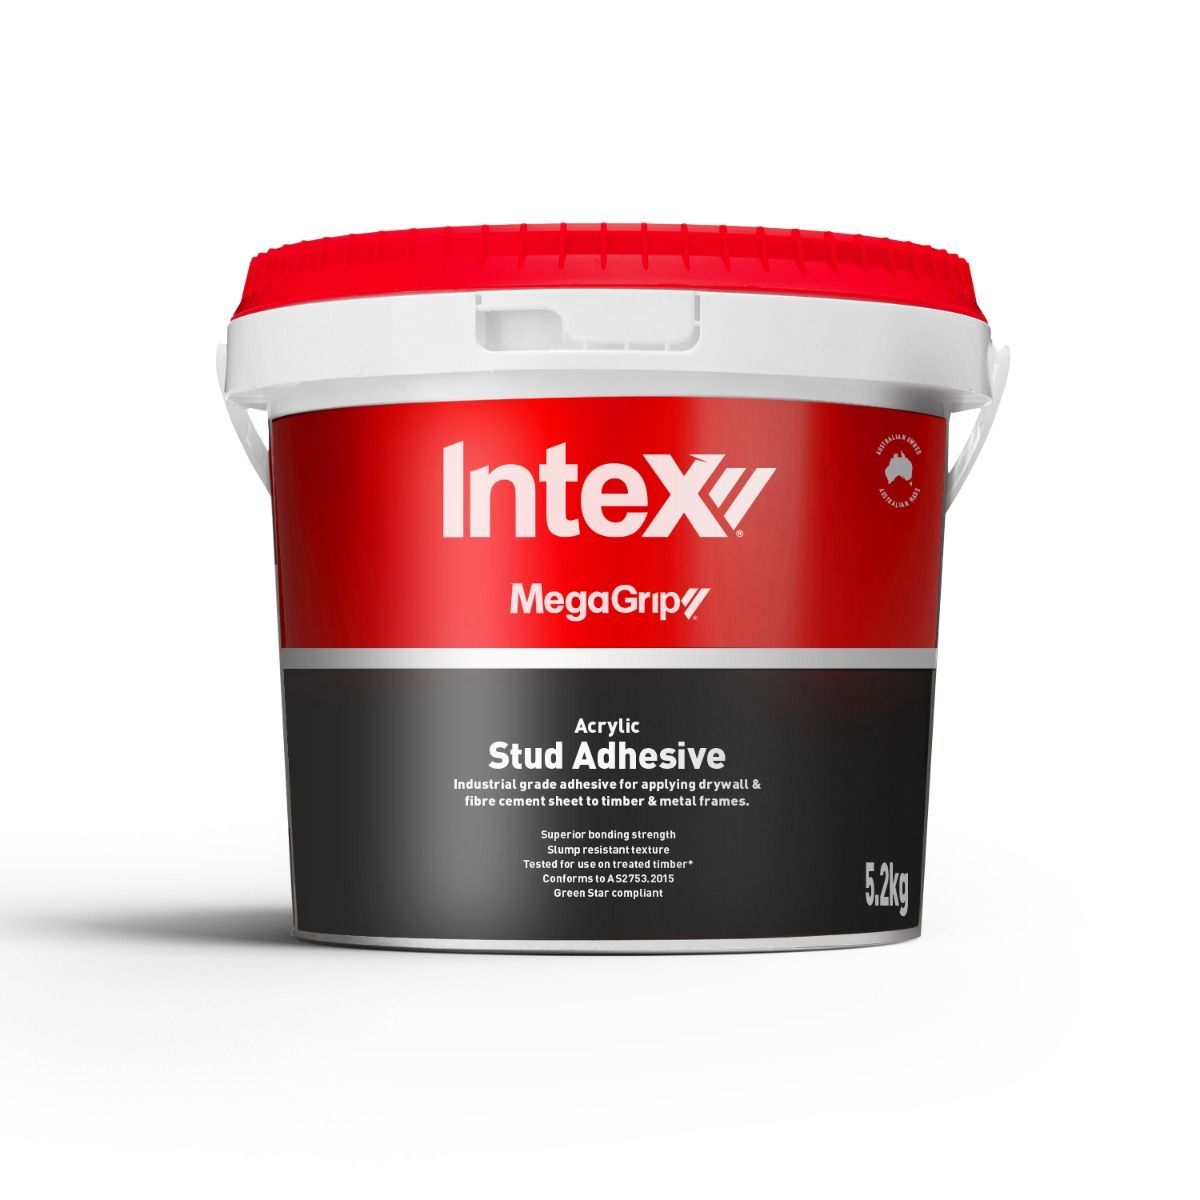 Intex MegaGrip® Acrylic Stud Adhesive Tubs